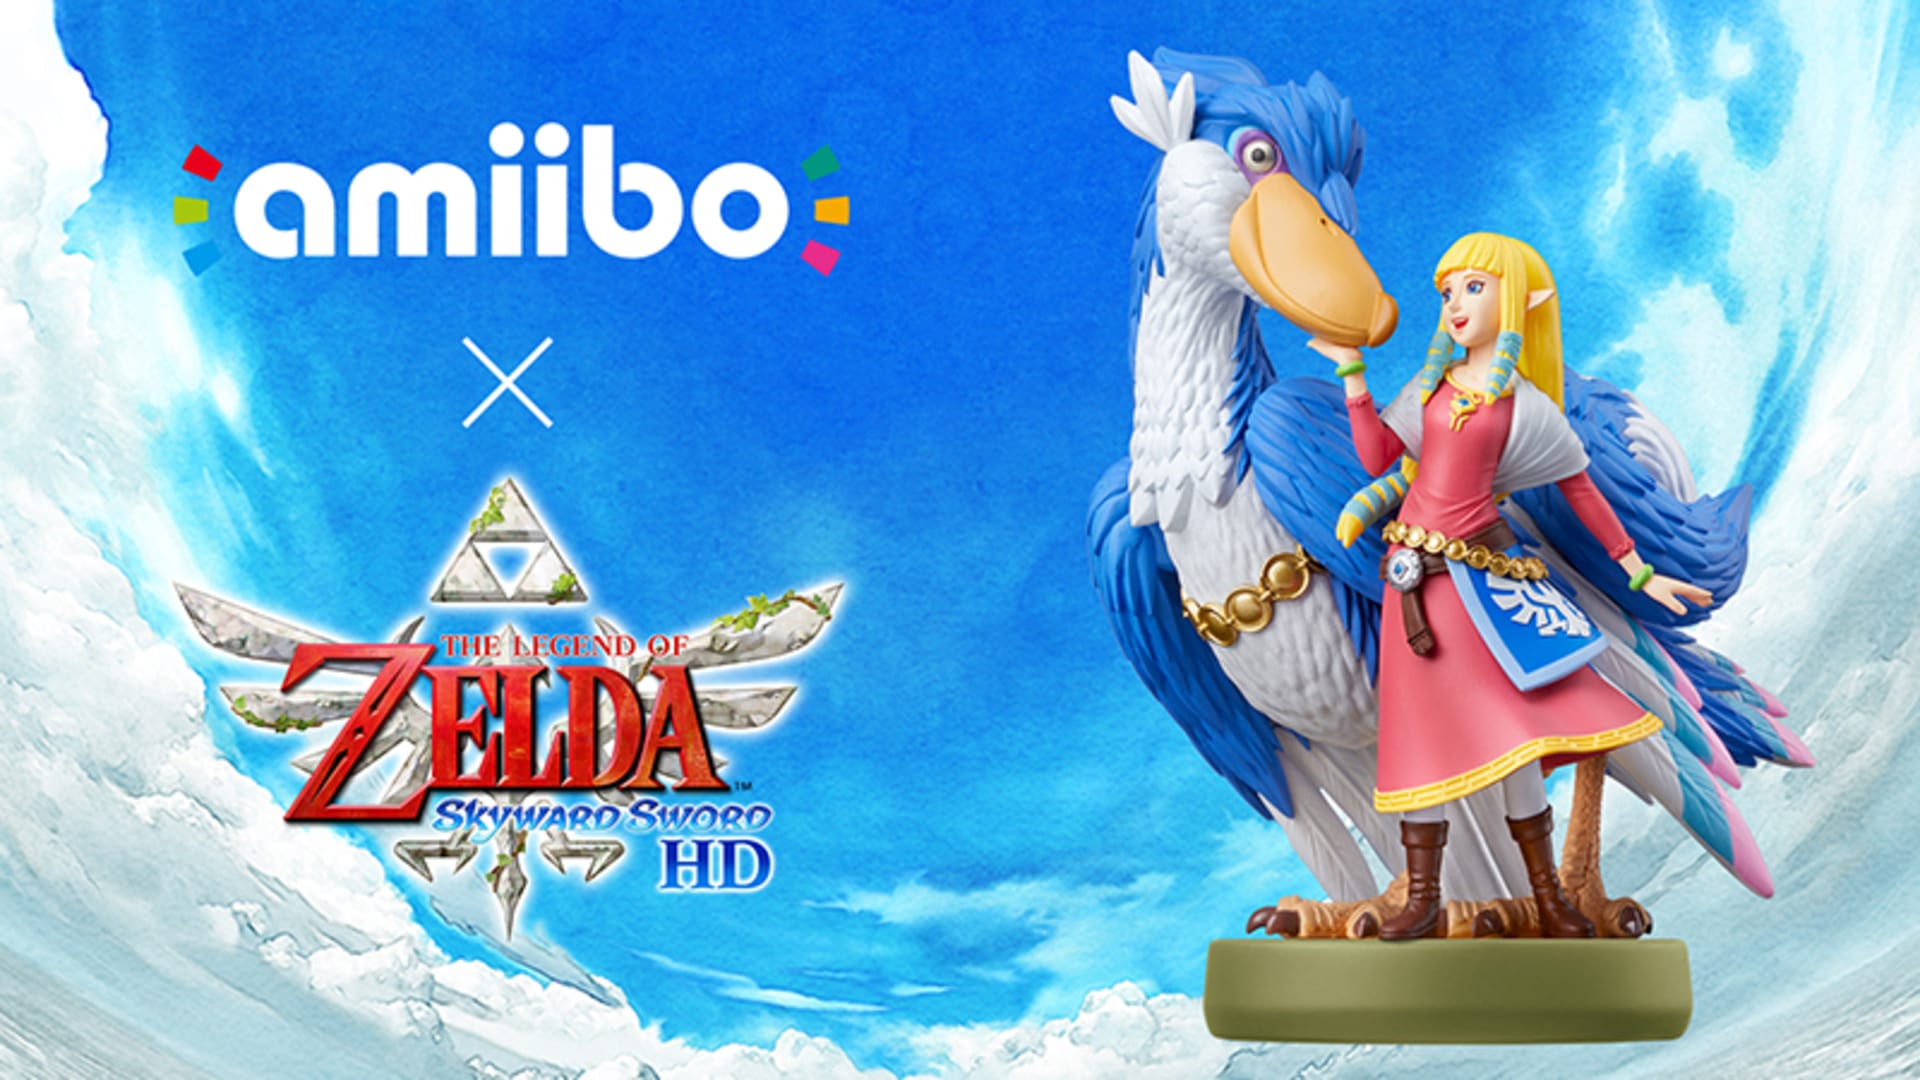 New Zelda and Loftwing amiibo figure launches alongside The Legend of Zelda  Skyward Sword HD on July 16 - Nintendo - Official Site